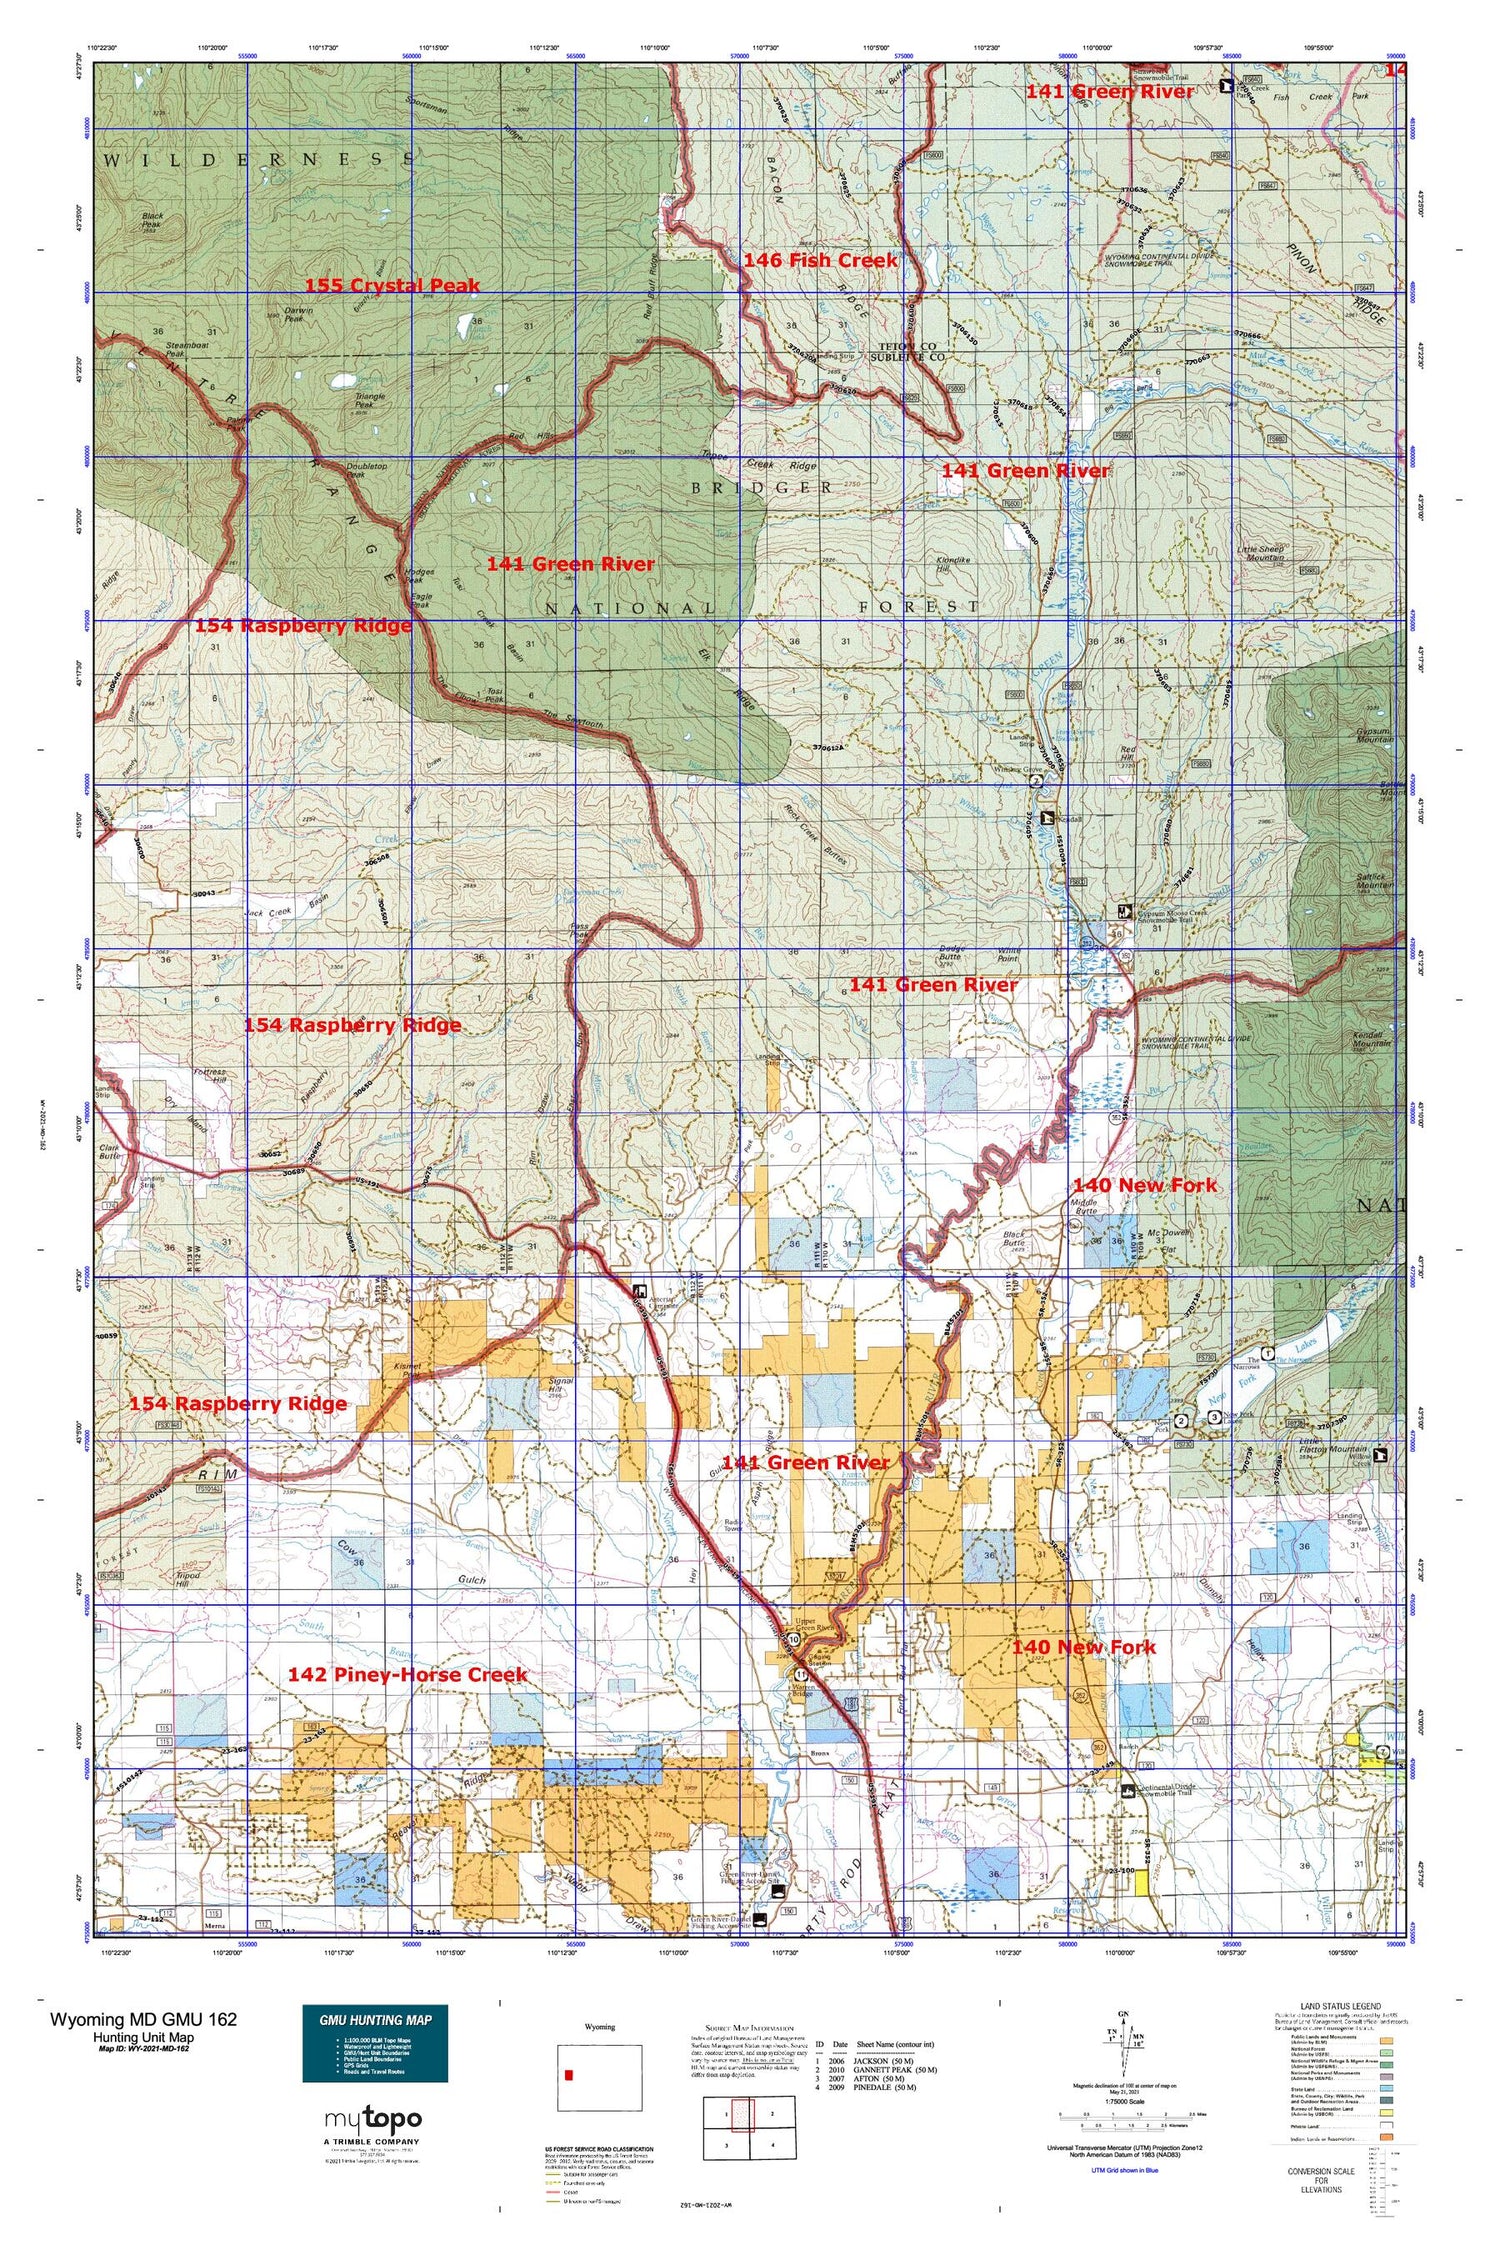 Wyoming Mule Deer GMU 162 Map Image